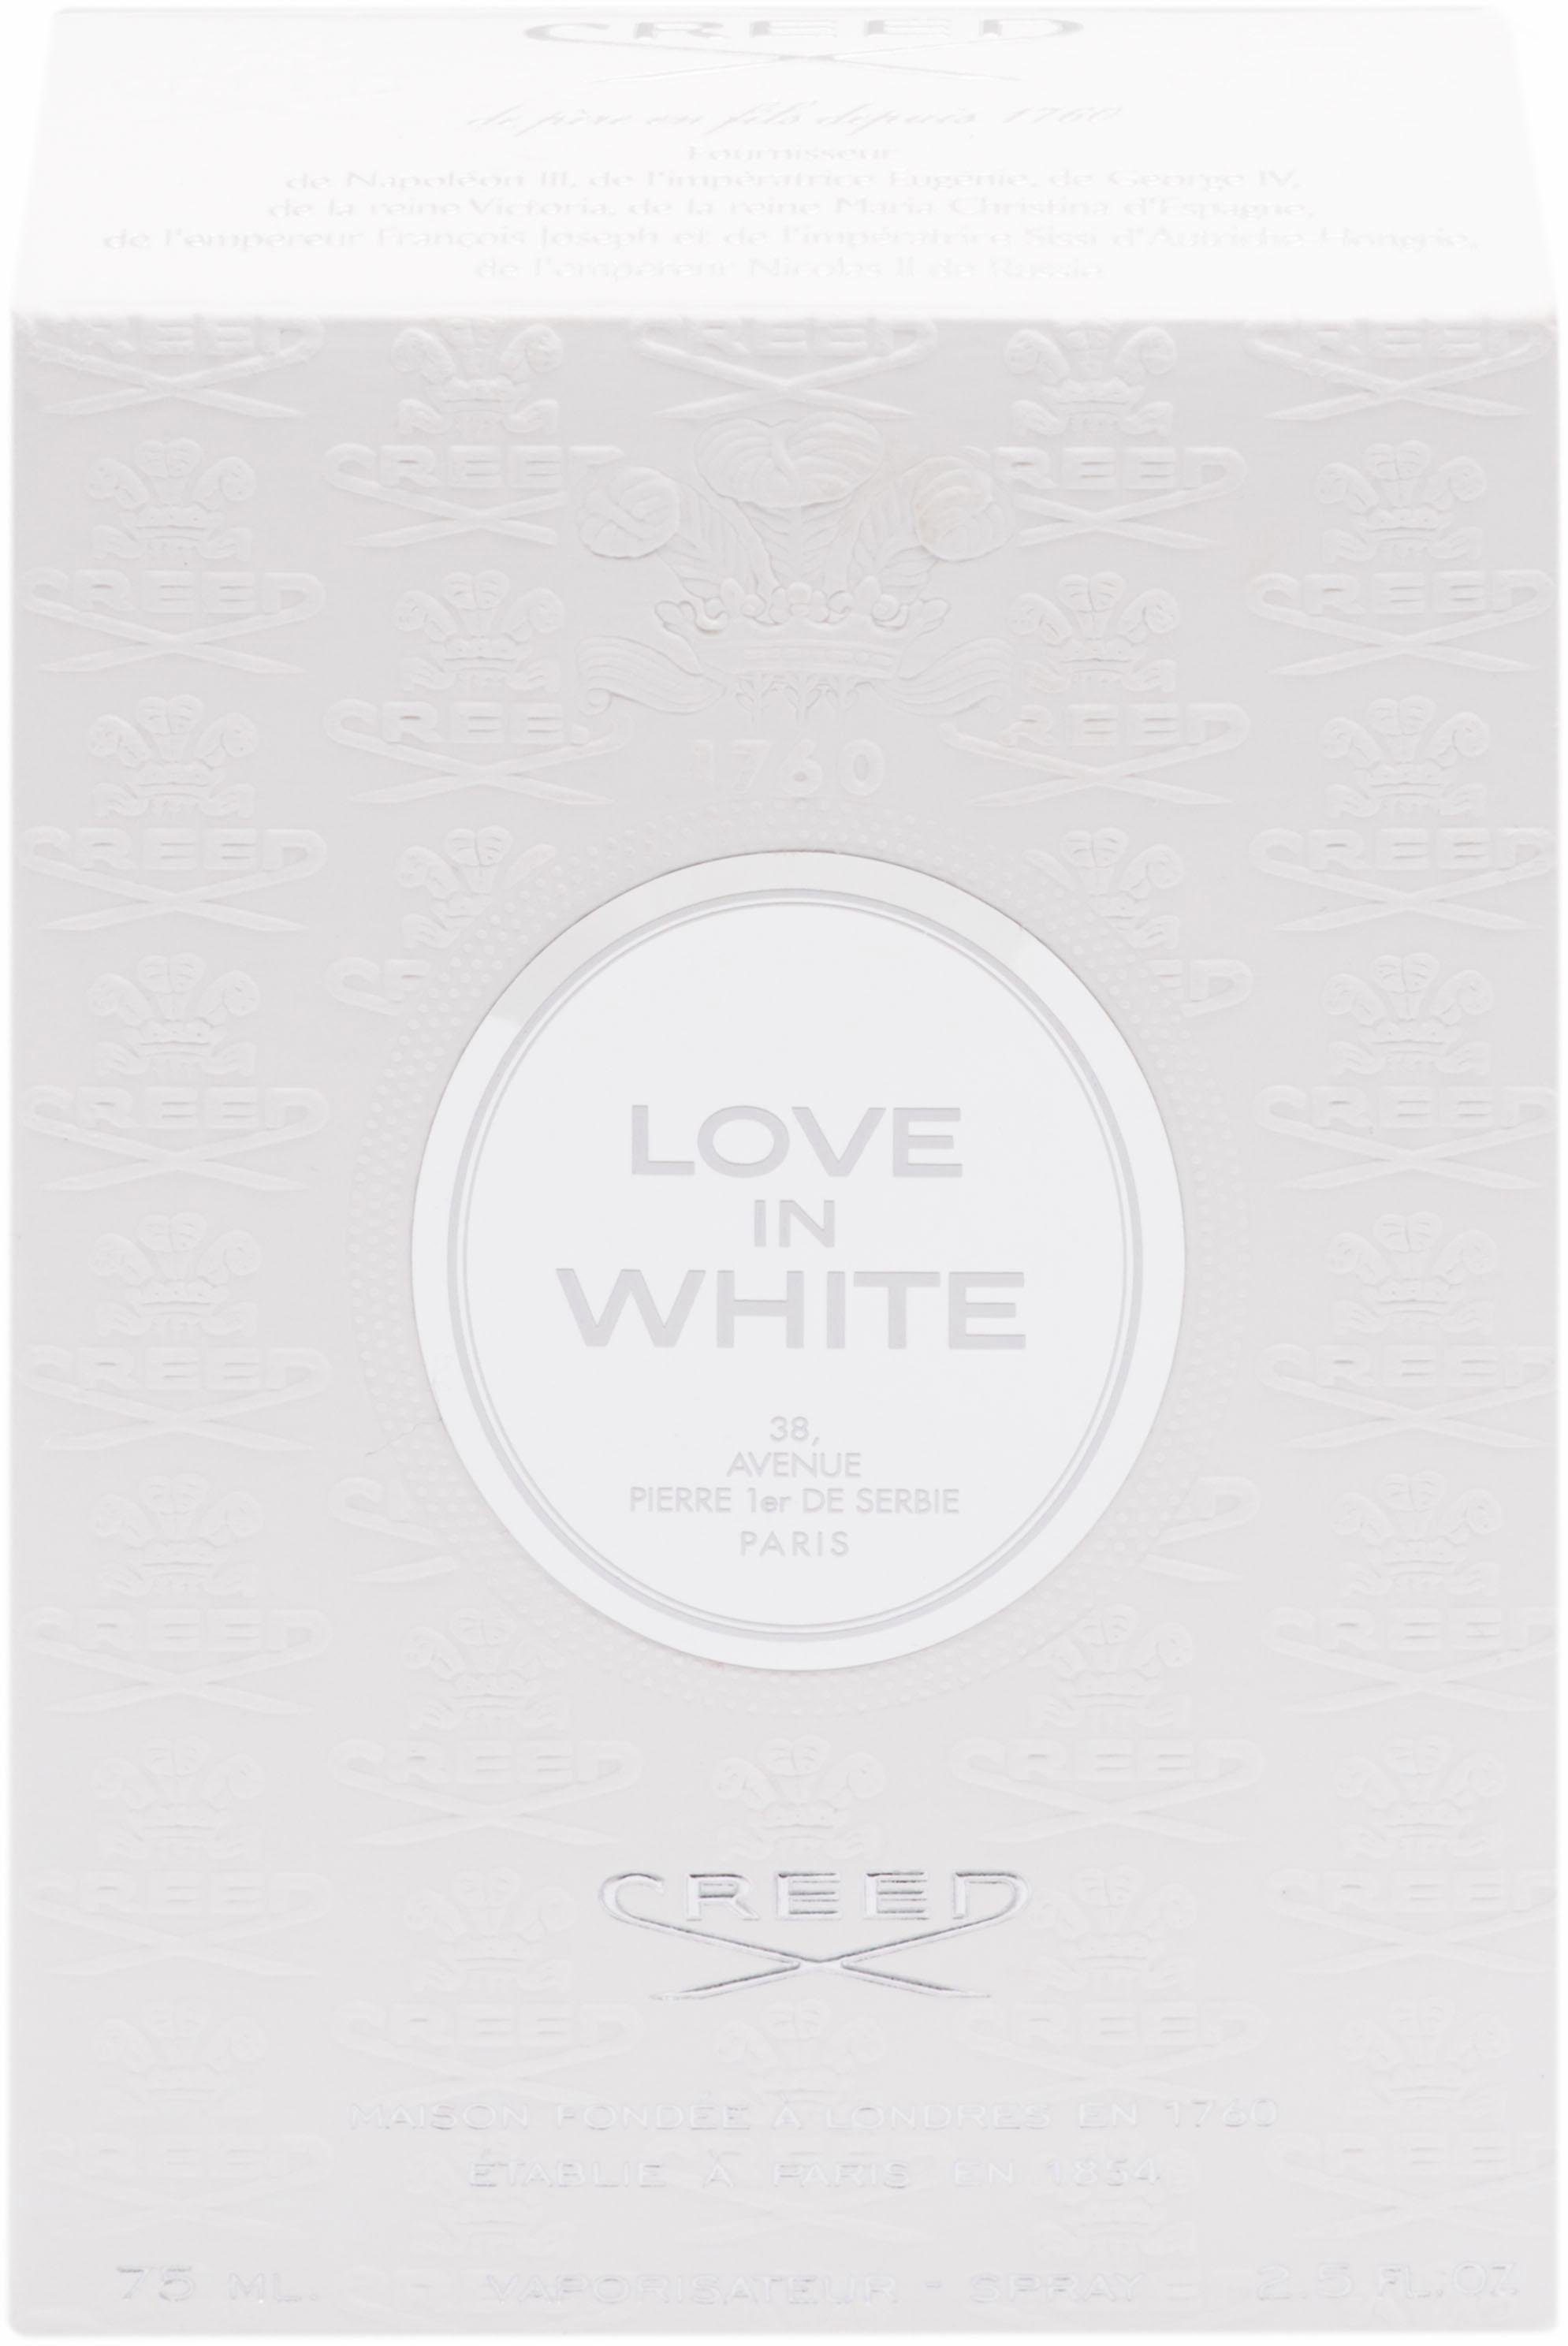 Creed Eau de Love in Parfum White